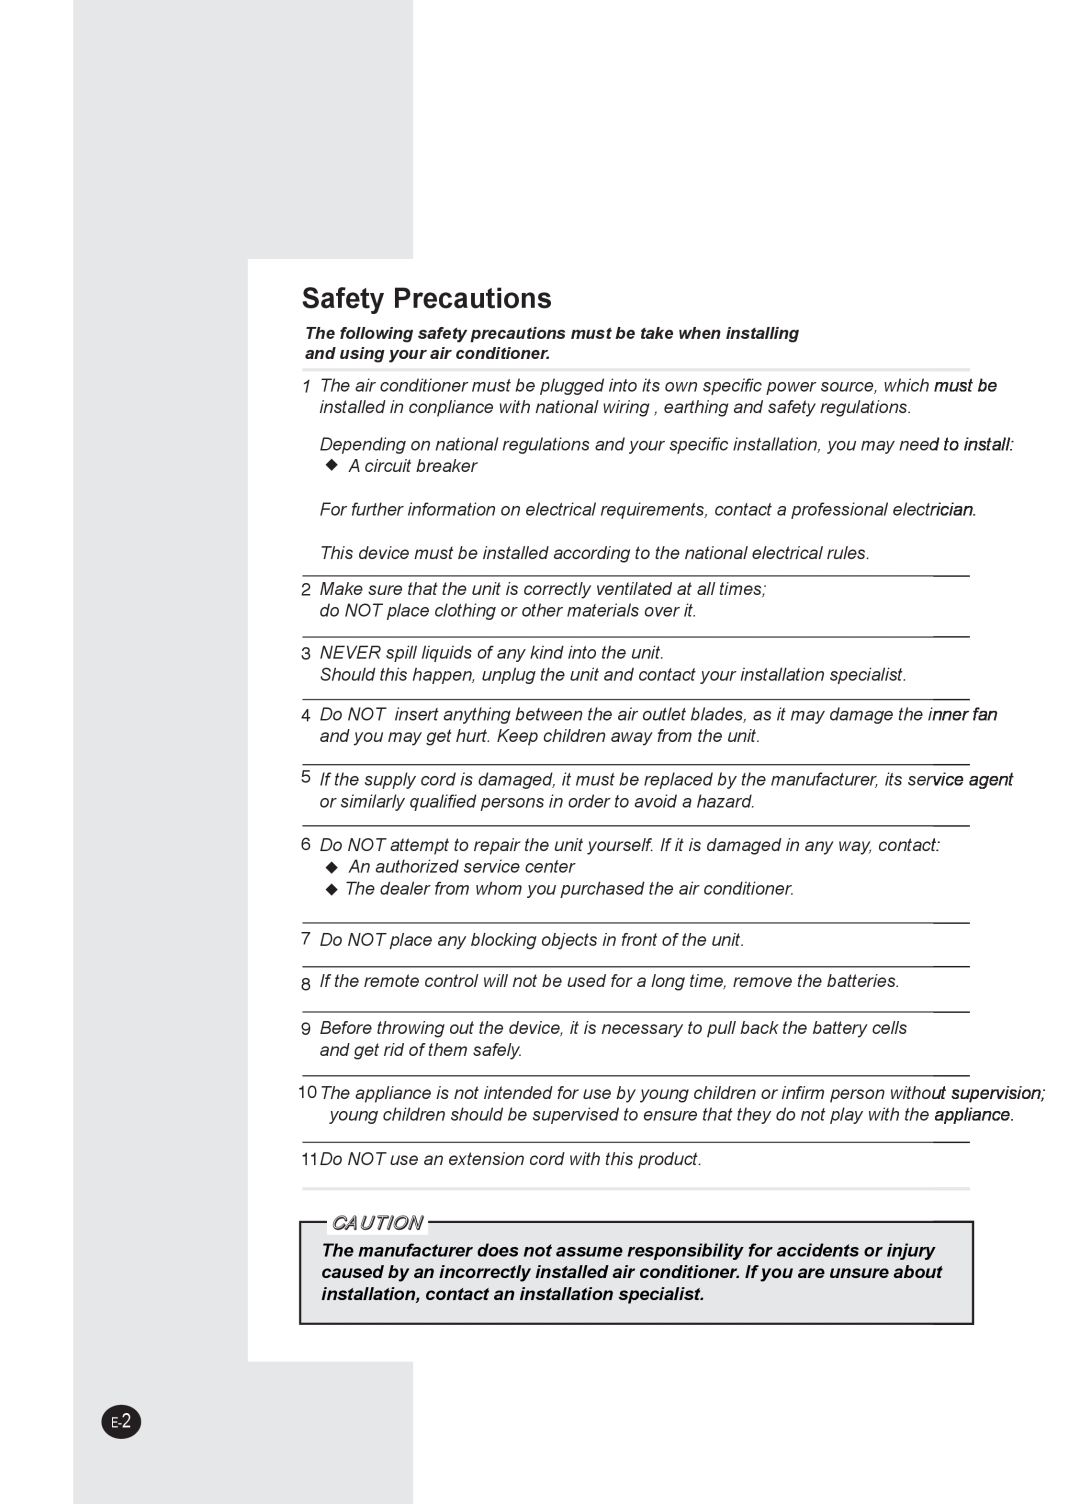 Samsung AW1293L, AW0693L, AW1893L, AW1093L, AW0893L, AW0593L manual Safety Precautions 